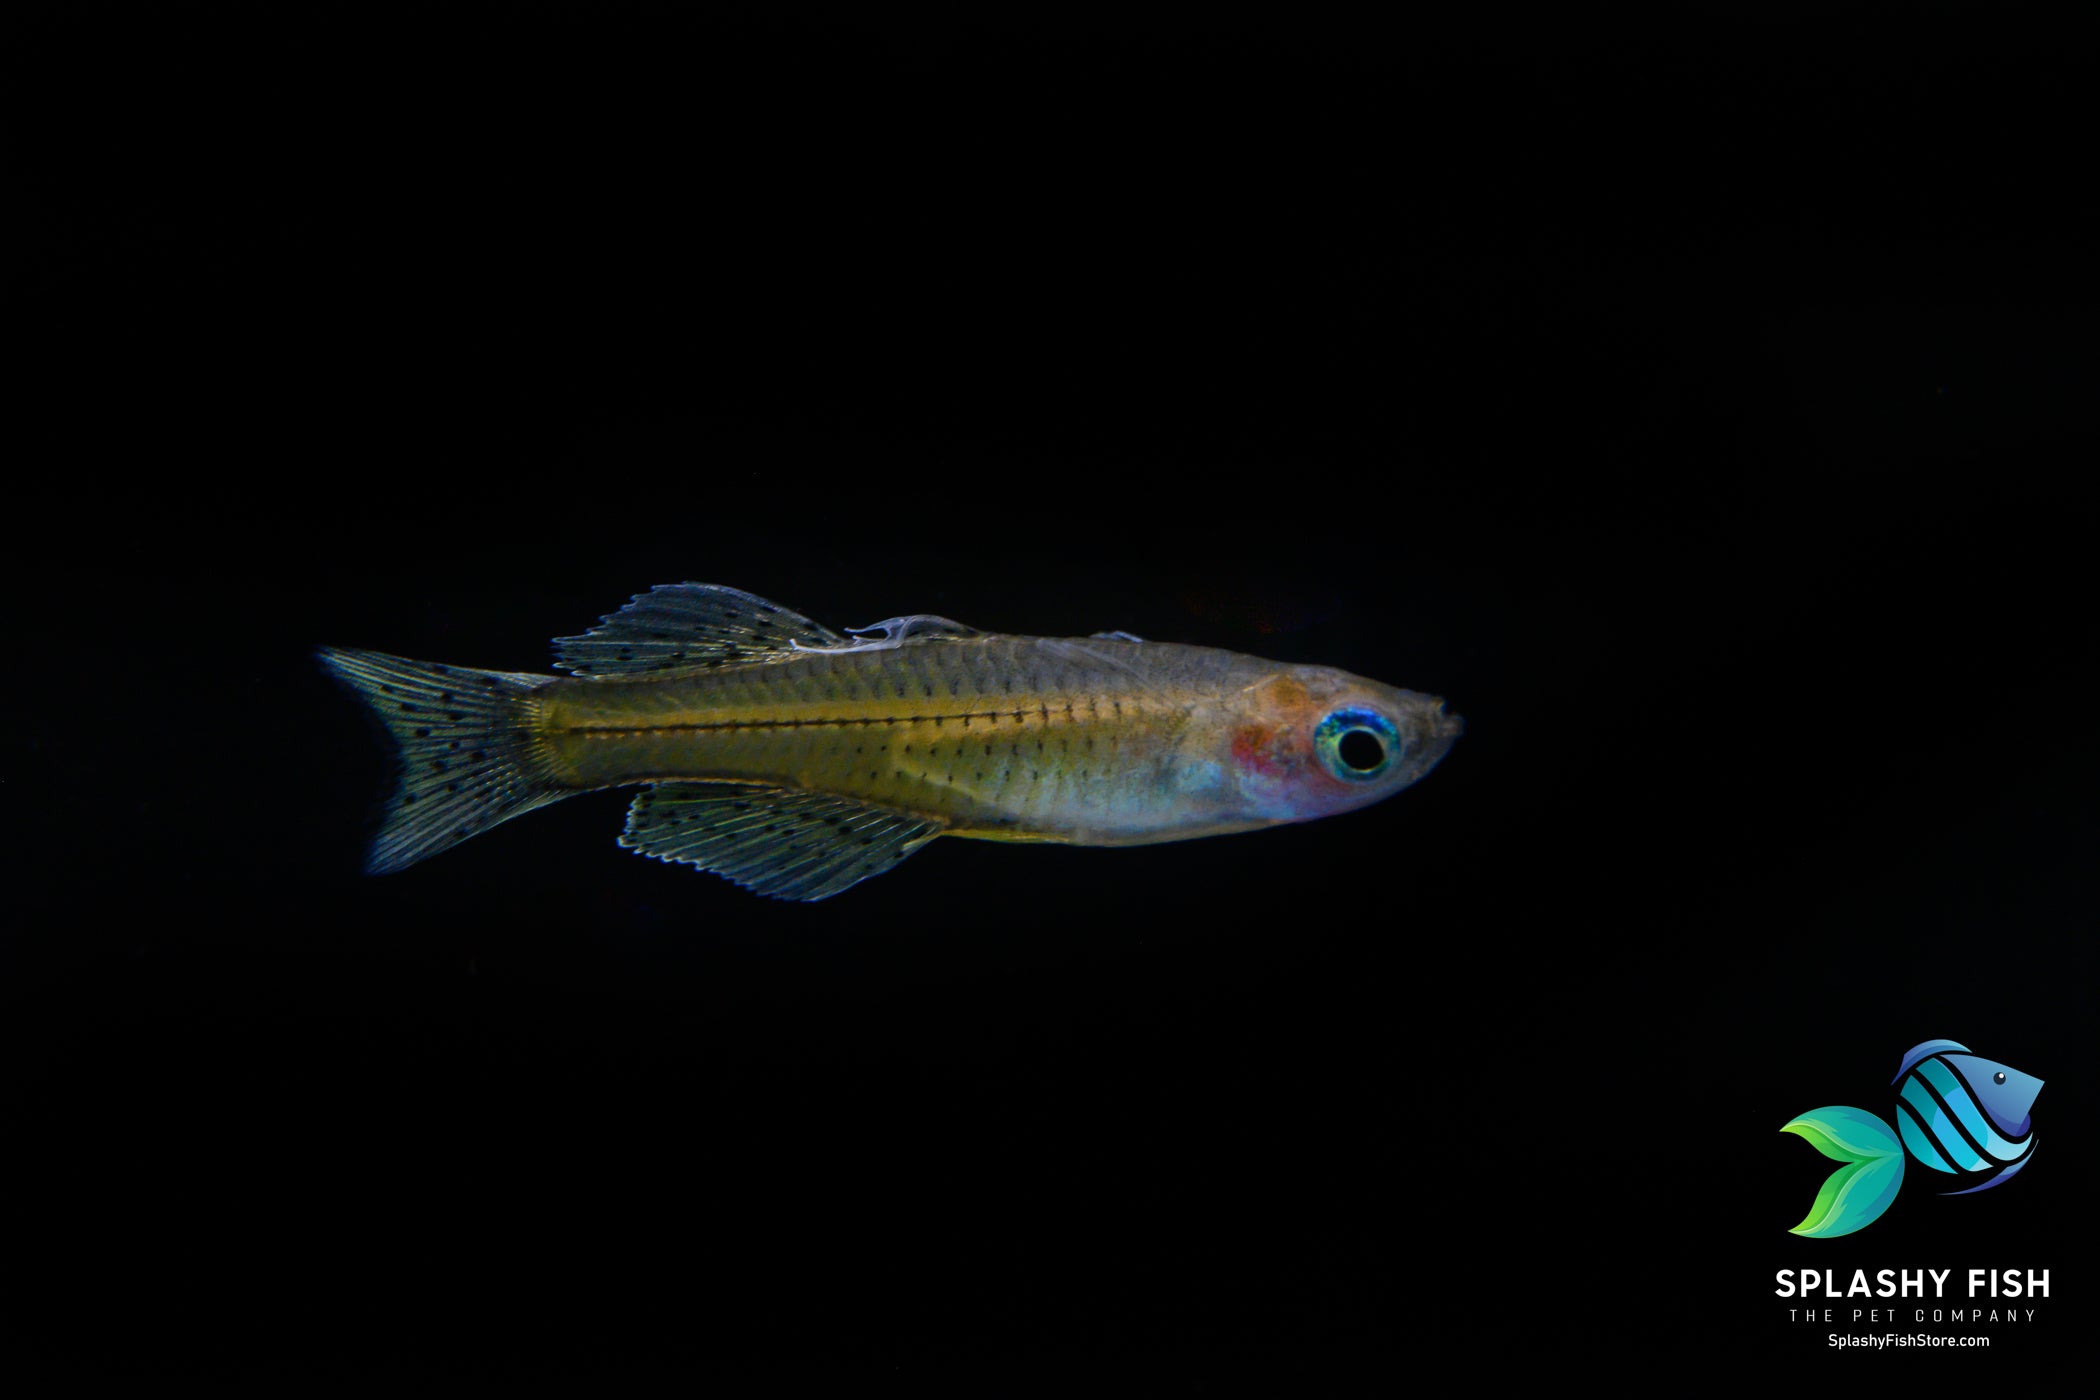 Blue Eye Dwarf Rainbow Fish (Pseudomugil luminatus) native to New Guinea, Indonesia